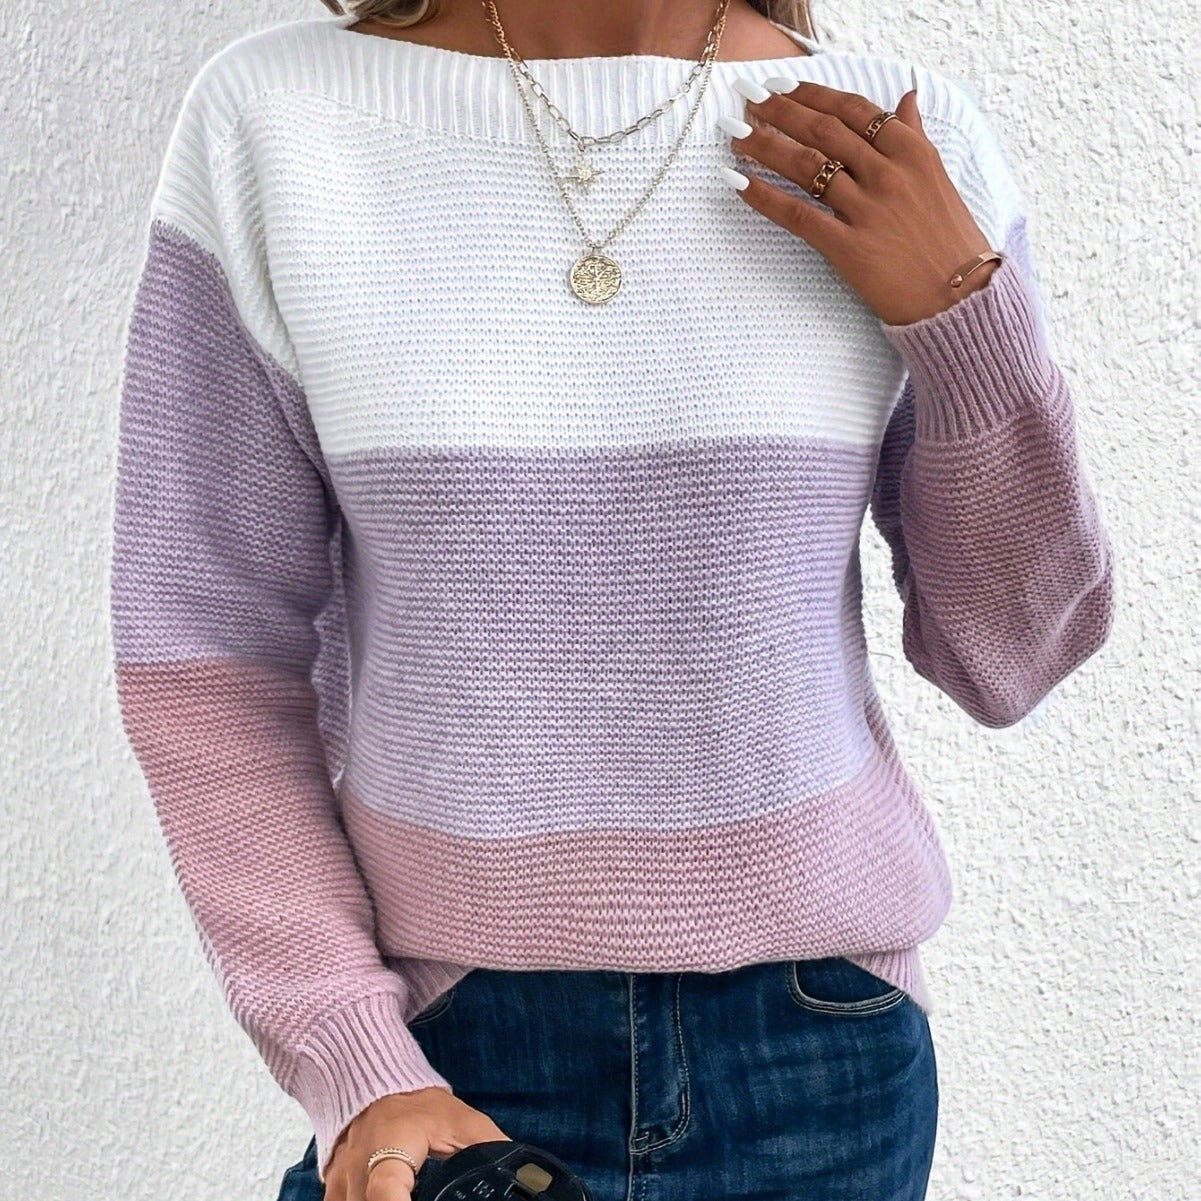 Women's Round Neck Splicing Knitwear Loose Top Sweater